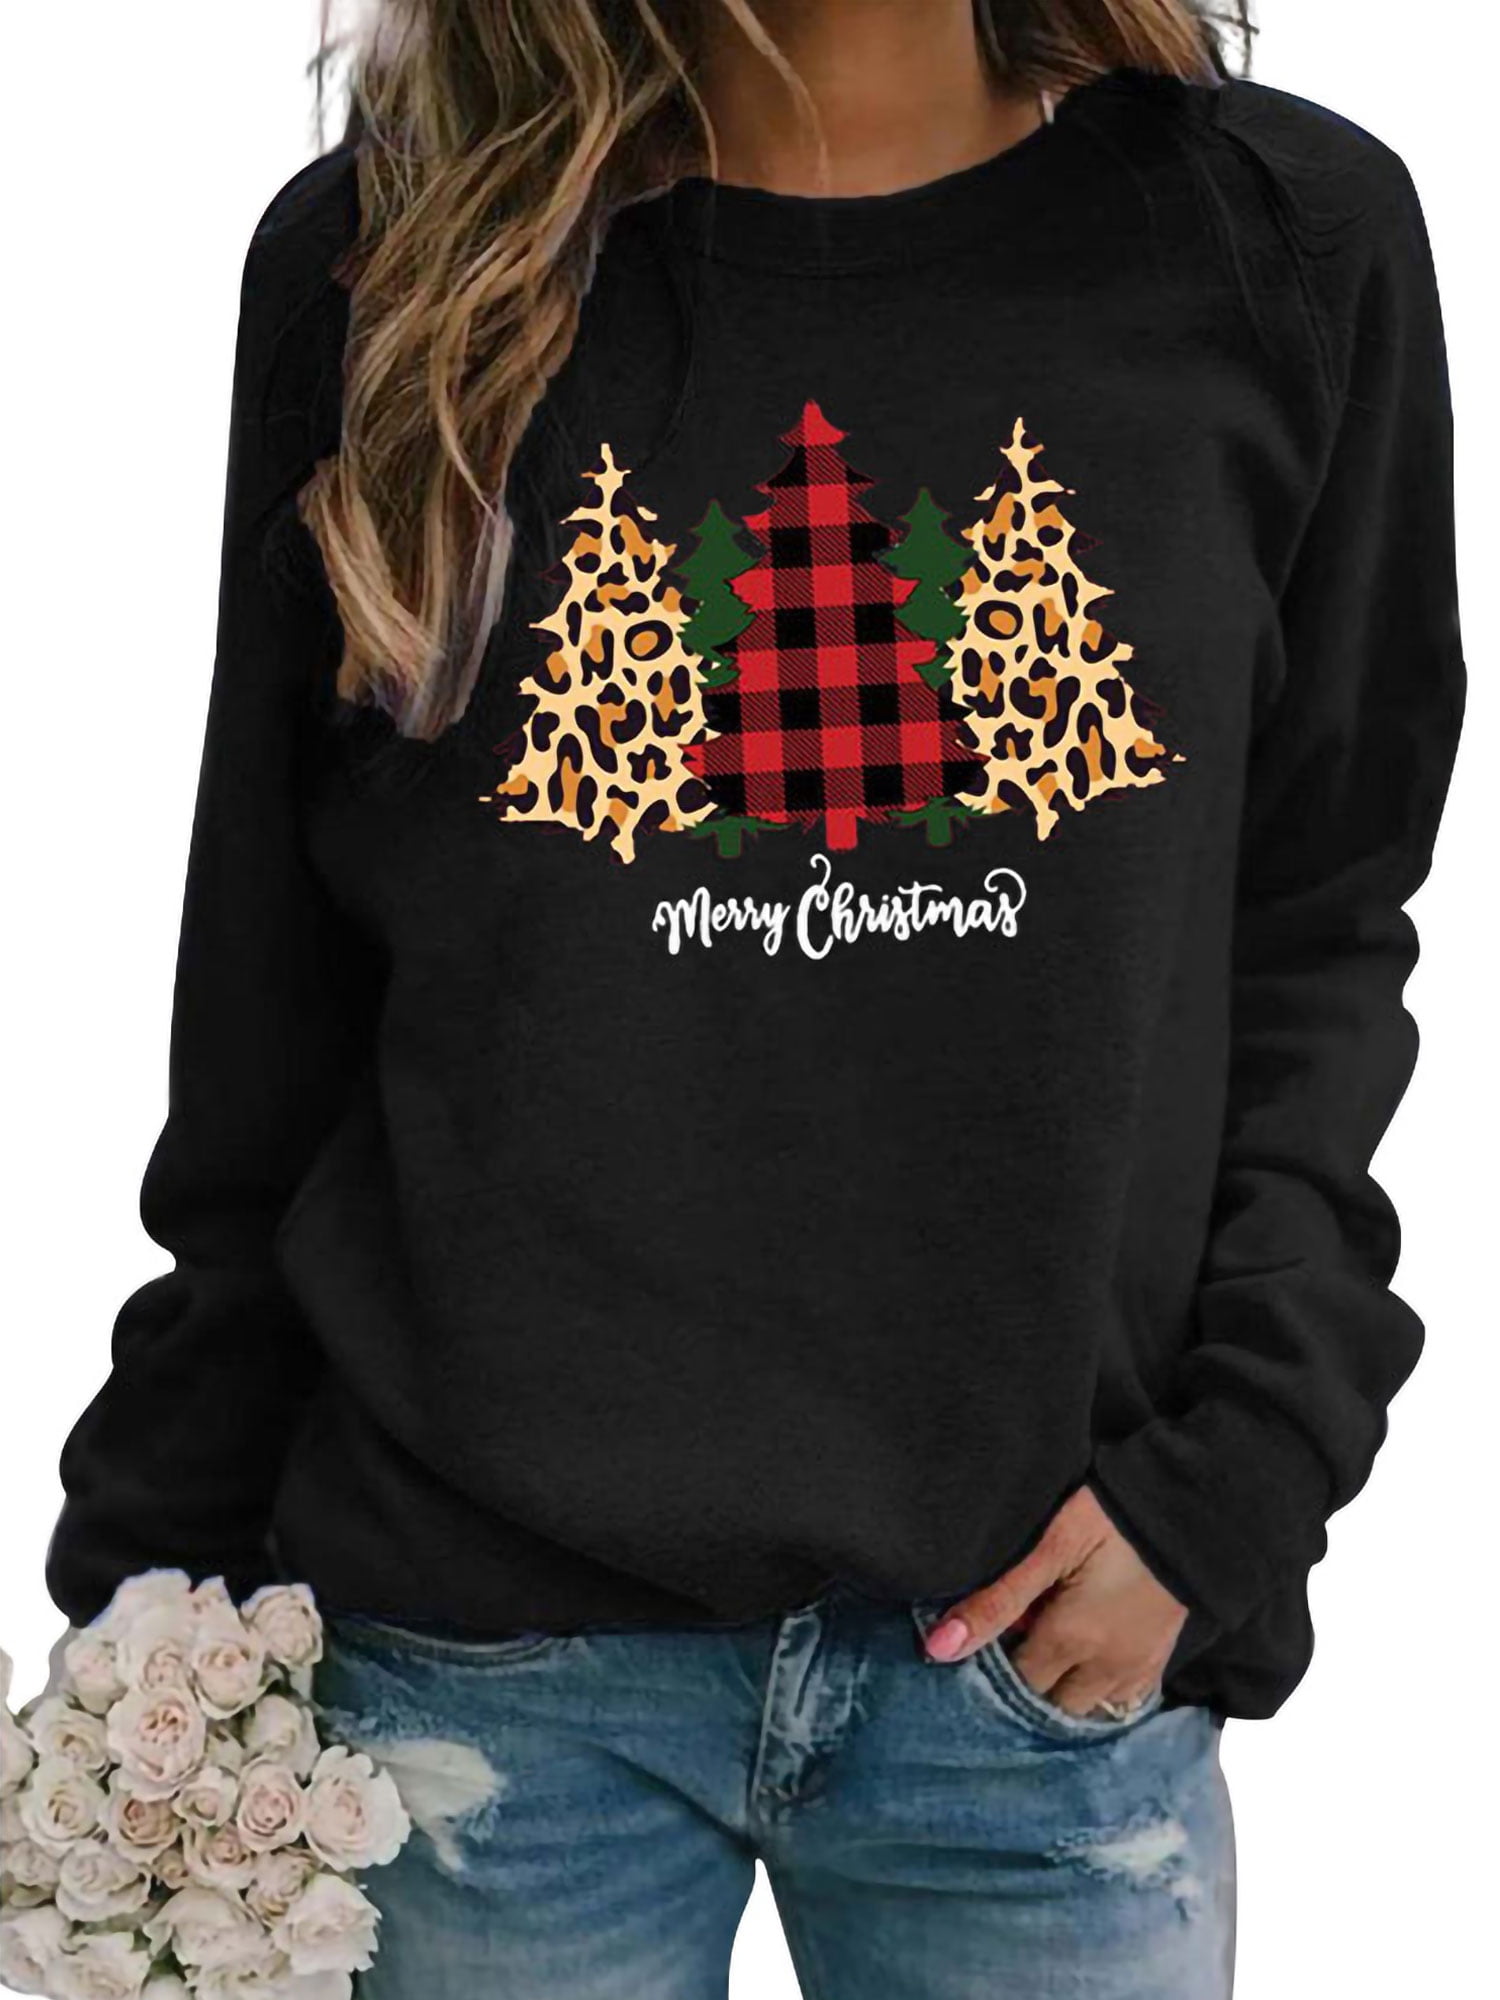 Gifts for Women Christmas Trees Christmas Sweatshirt Buffalo Plaid Shirt Leopard Printed Holiday Shirt,Merry Christmas Crewneck Sweater